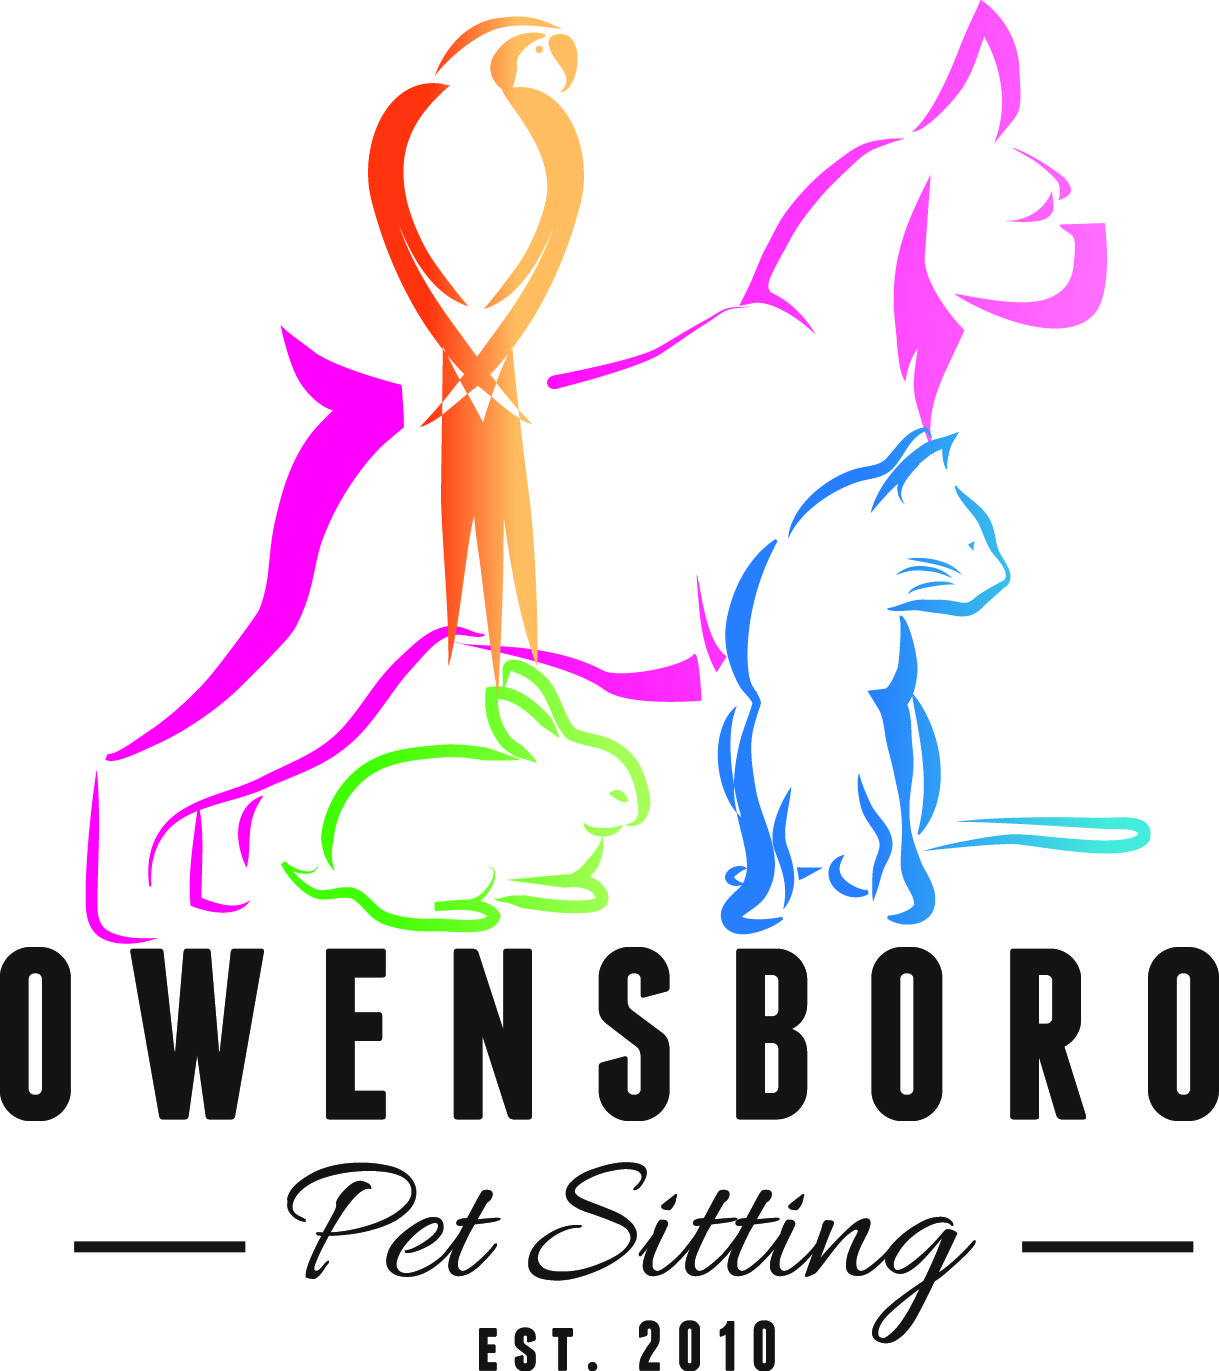 Owensboro Pet Sitting